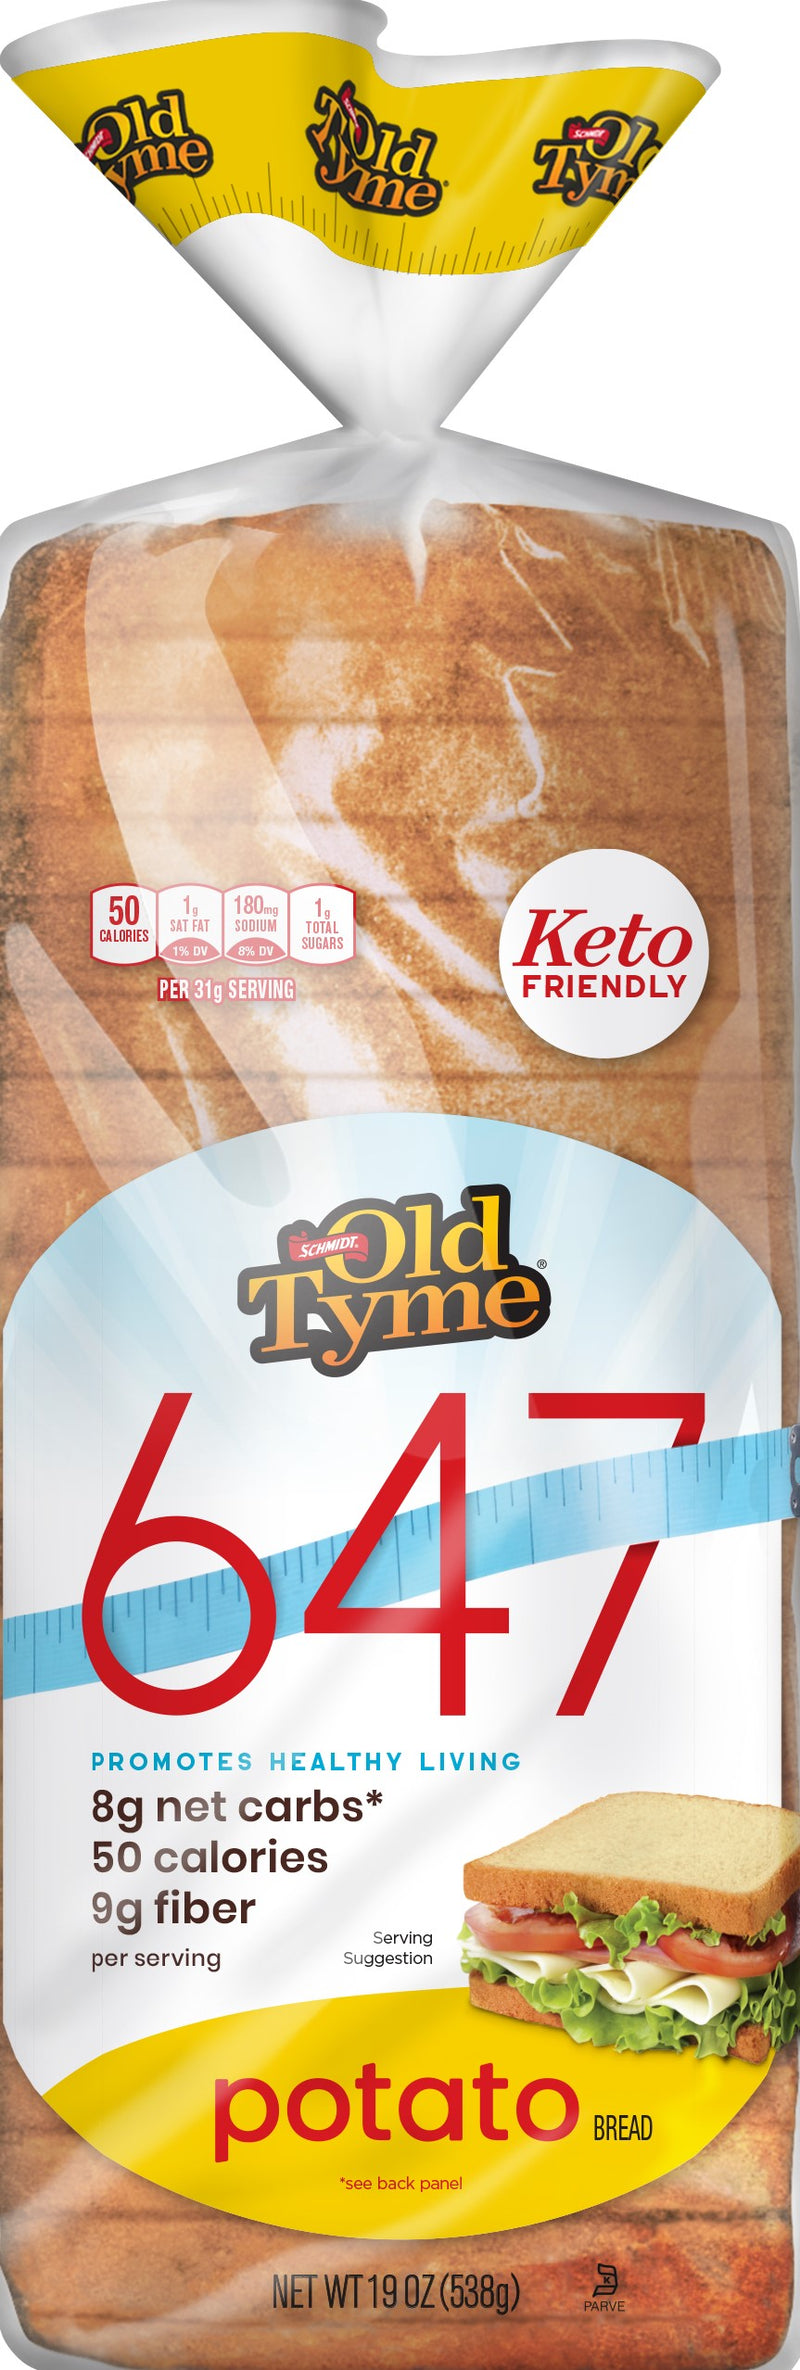 Schmidt / Old Tyme 647 Bread